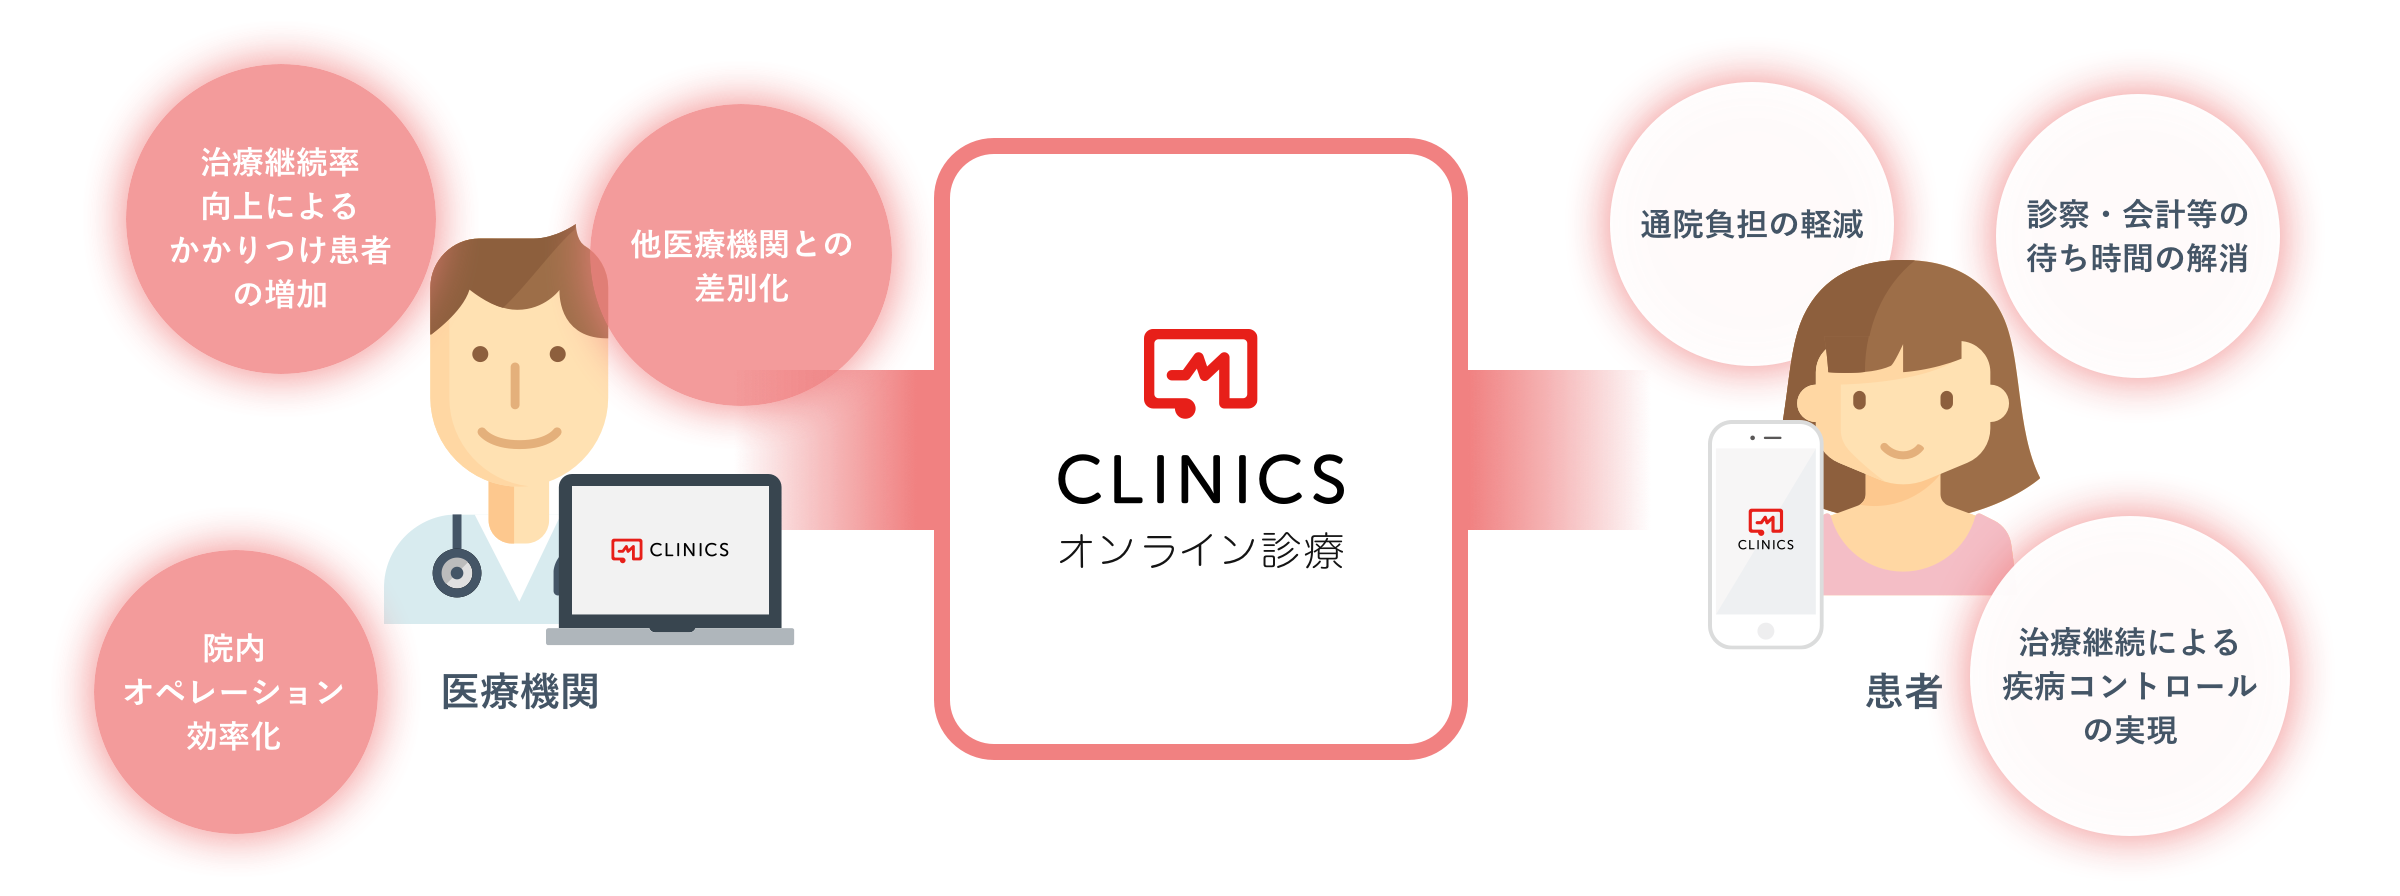 CLINICSオンライン診療｜クラウド診療支援システムCLINICS(クリニクス)